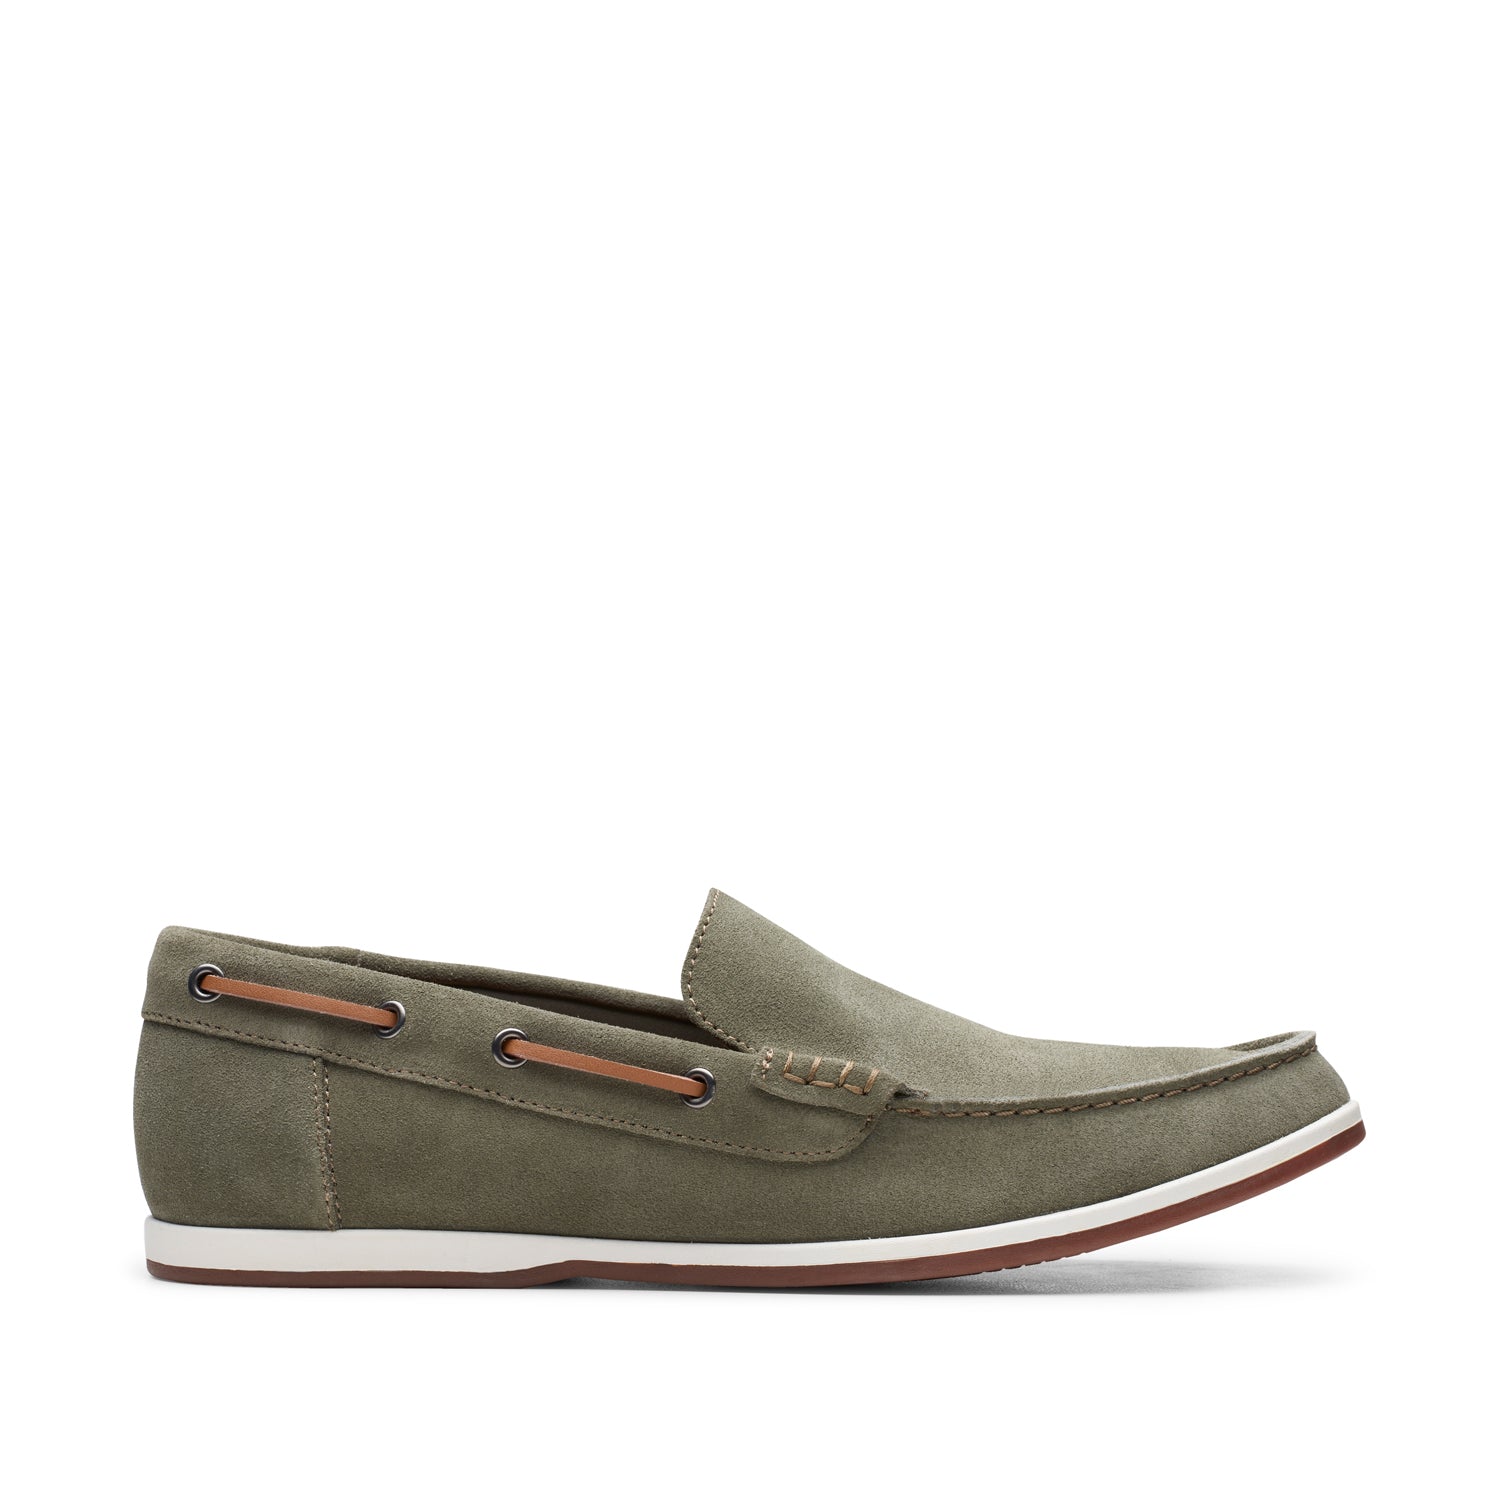 Clarks Men's Shoes - Sandals, Casual, Smart Styles | Online